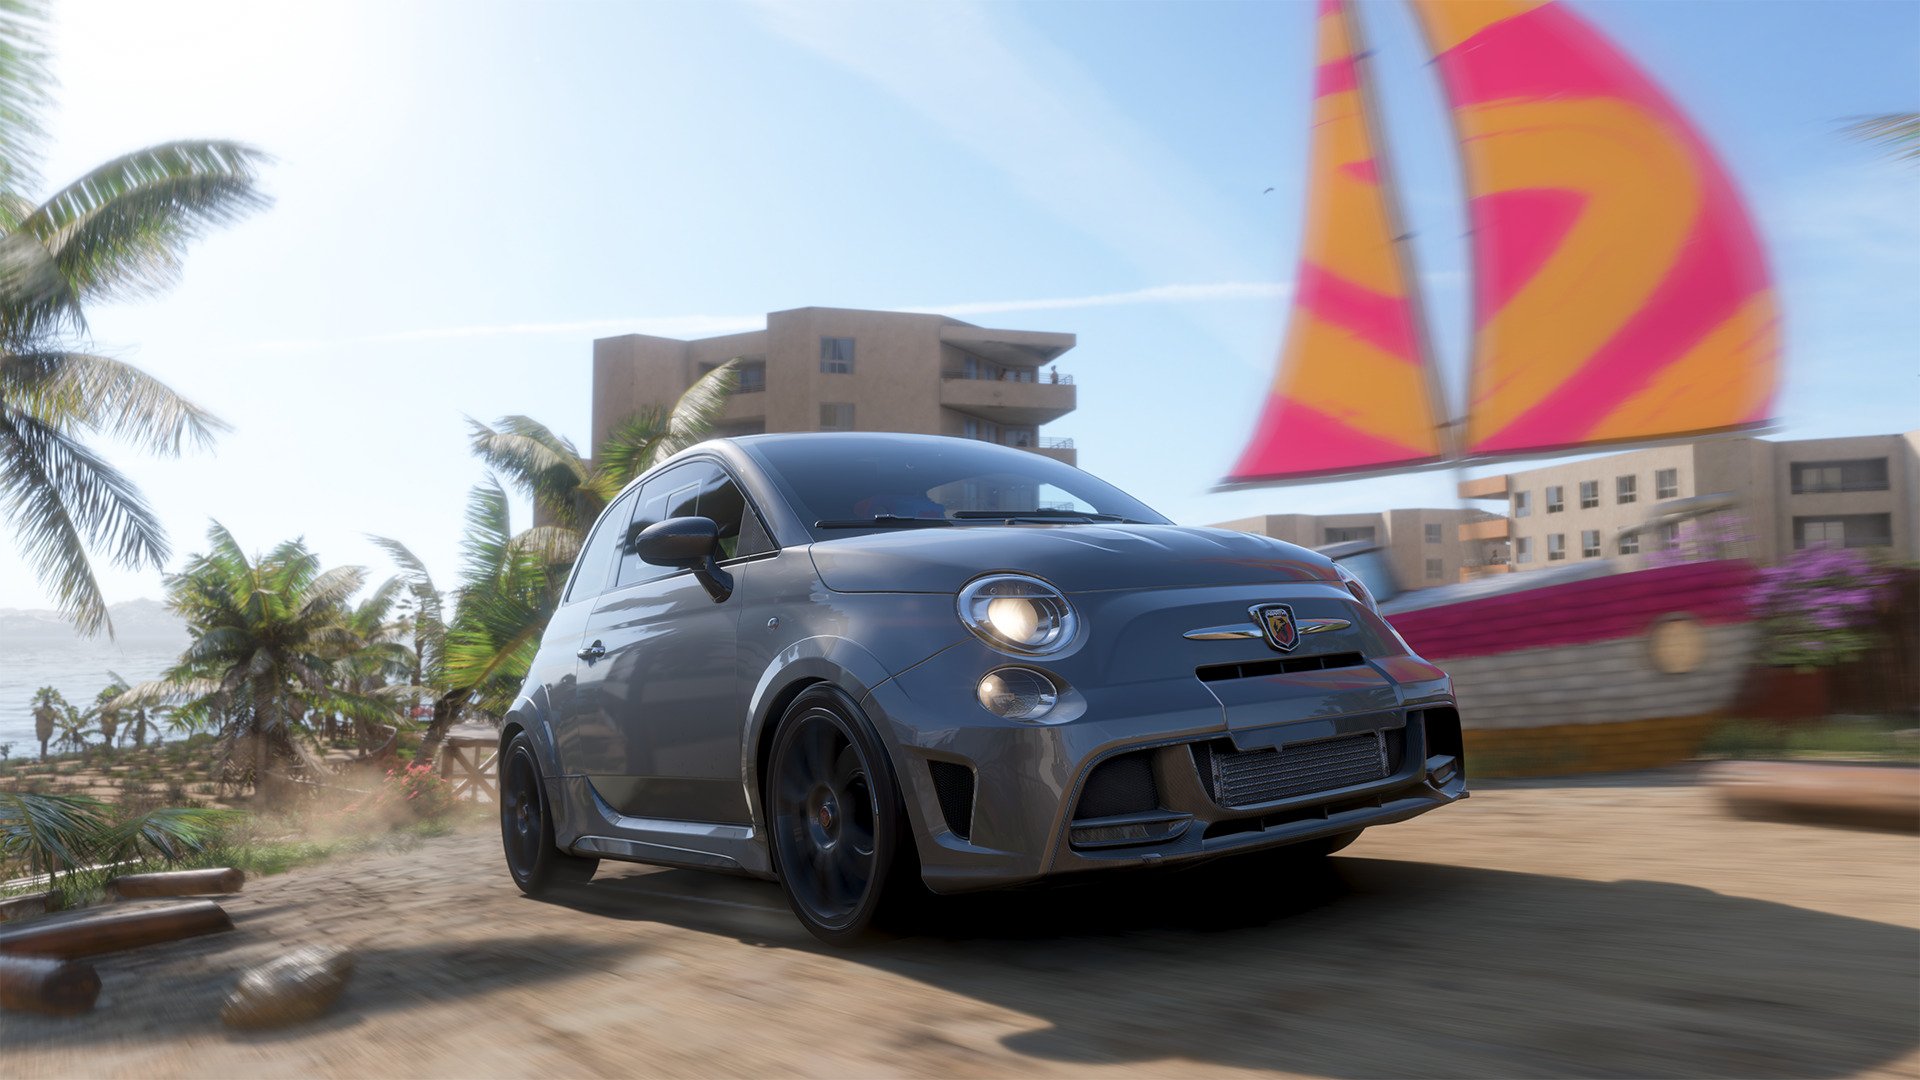 Forza Horizon 5's Italian Exotics Car Pack: All you need to know